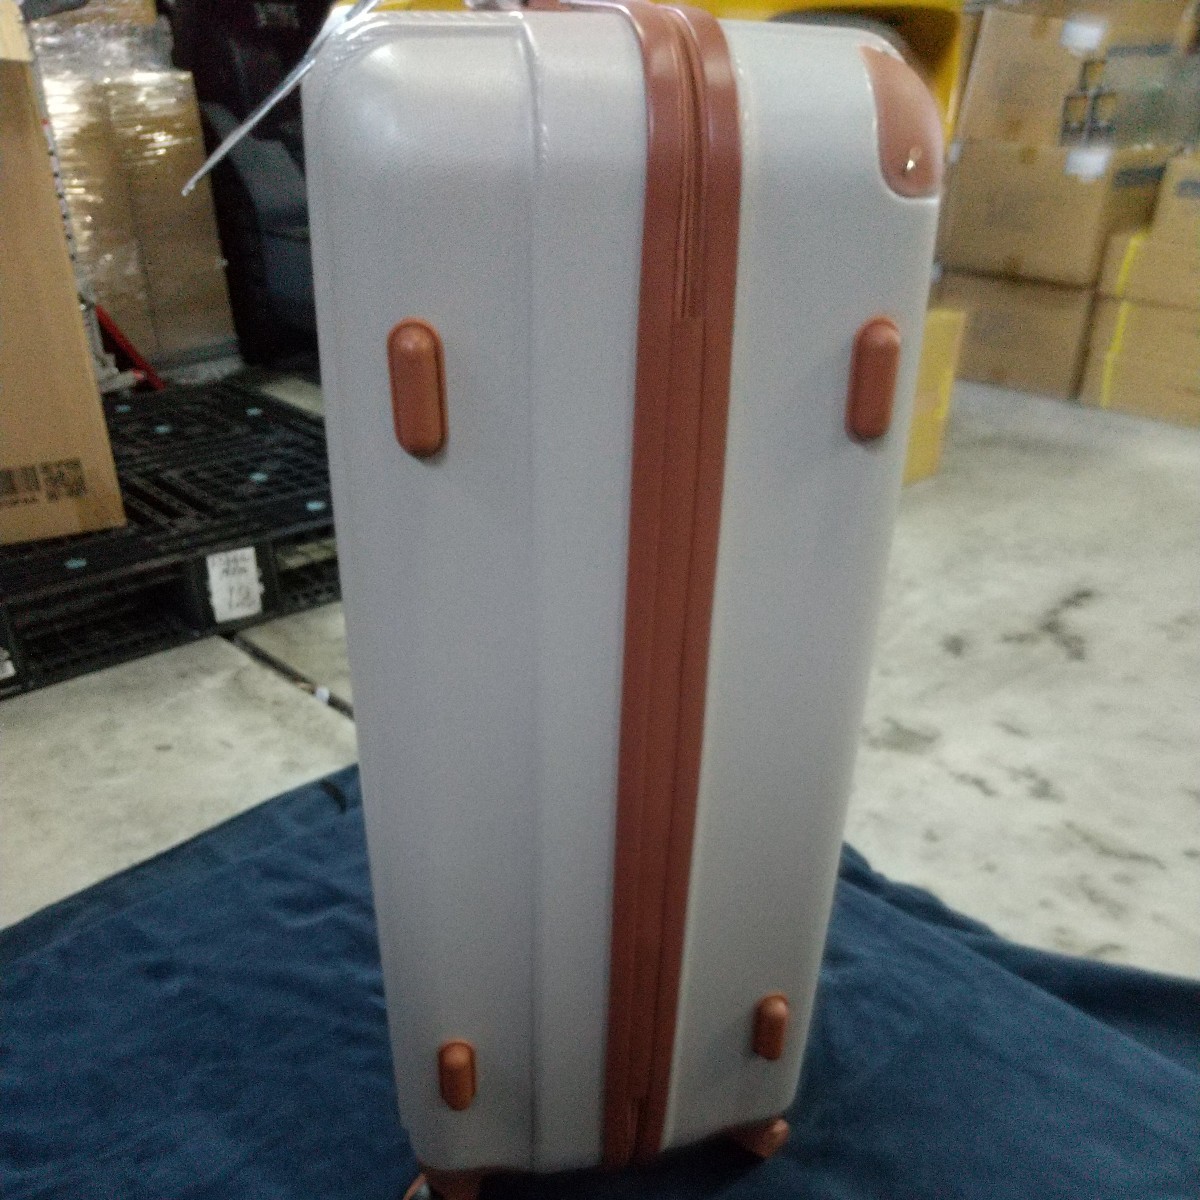 y022101t スーツケース キャリーバッグ キャリーケース 軽量 大型 TSAロック搭載 機内持込 360度回転 Lサイズ 100L ライトブルー×ベージュ